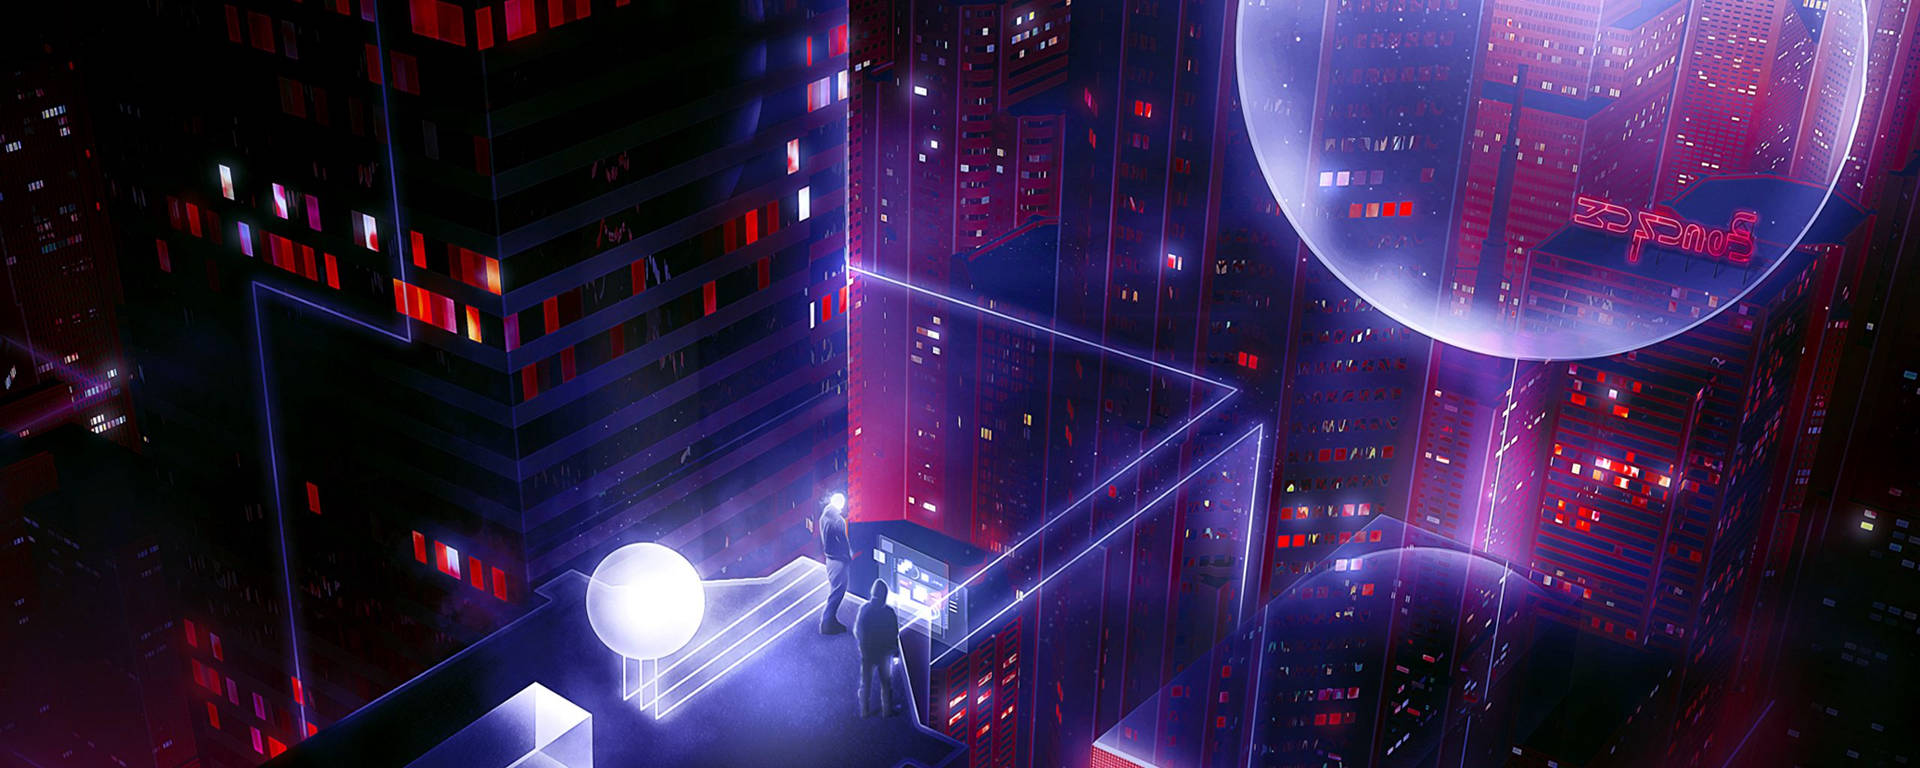 Ultrawide Cyberpunk Night City Buildings Background